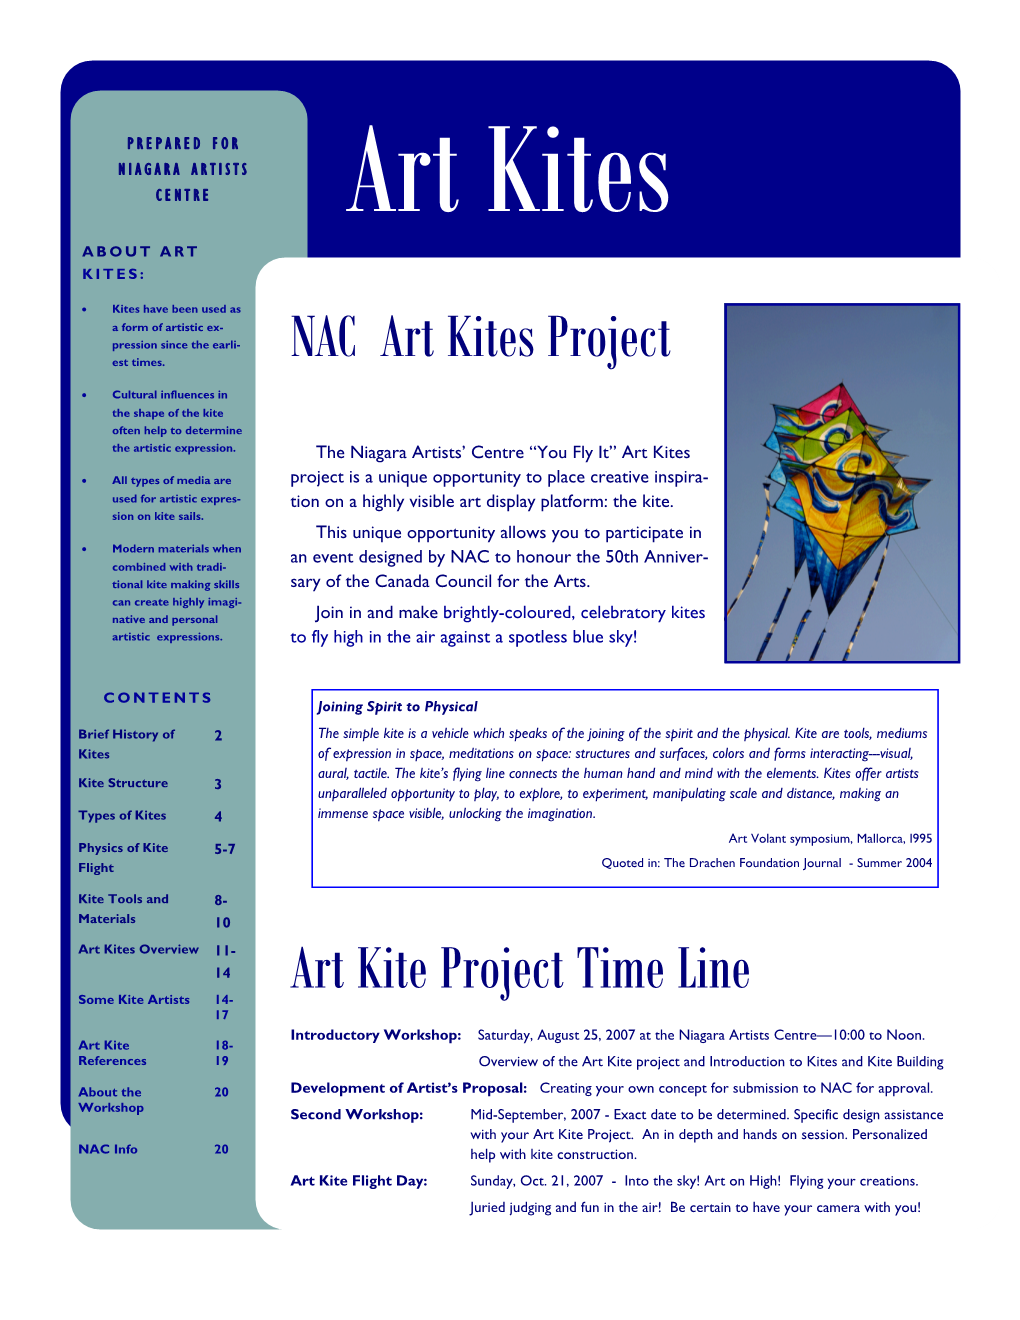 NAC Art Kites Project Art Kite Project Time Line